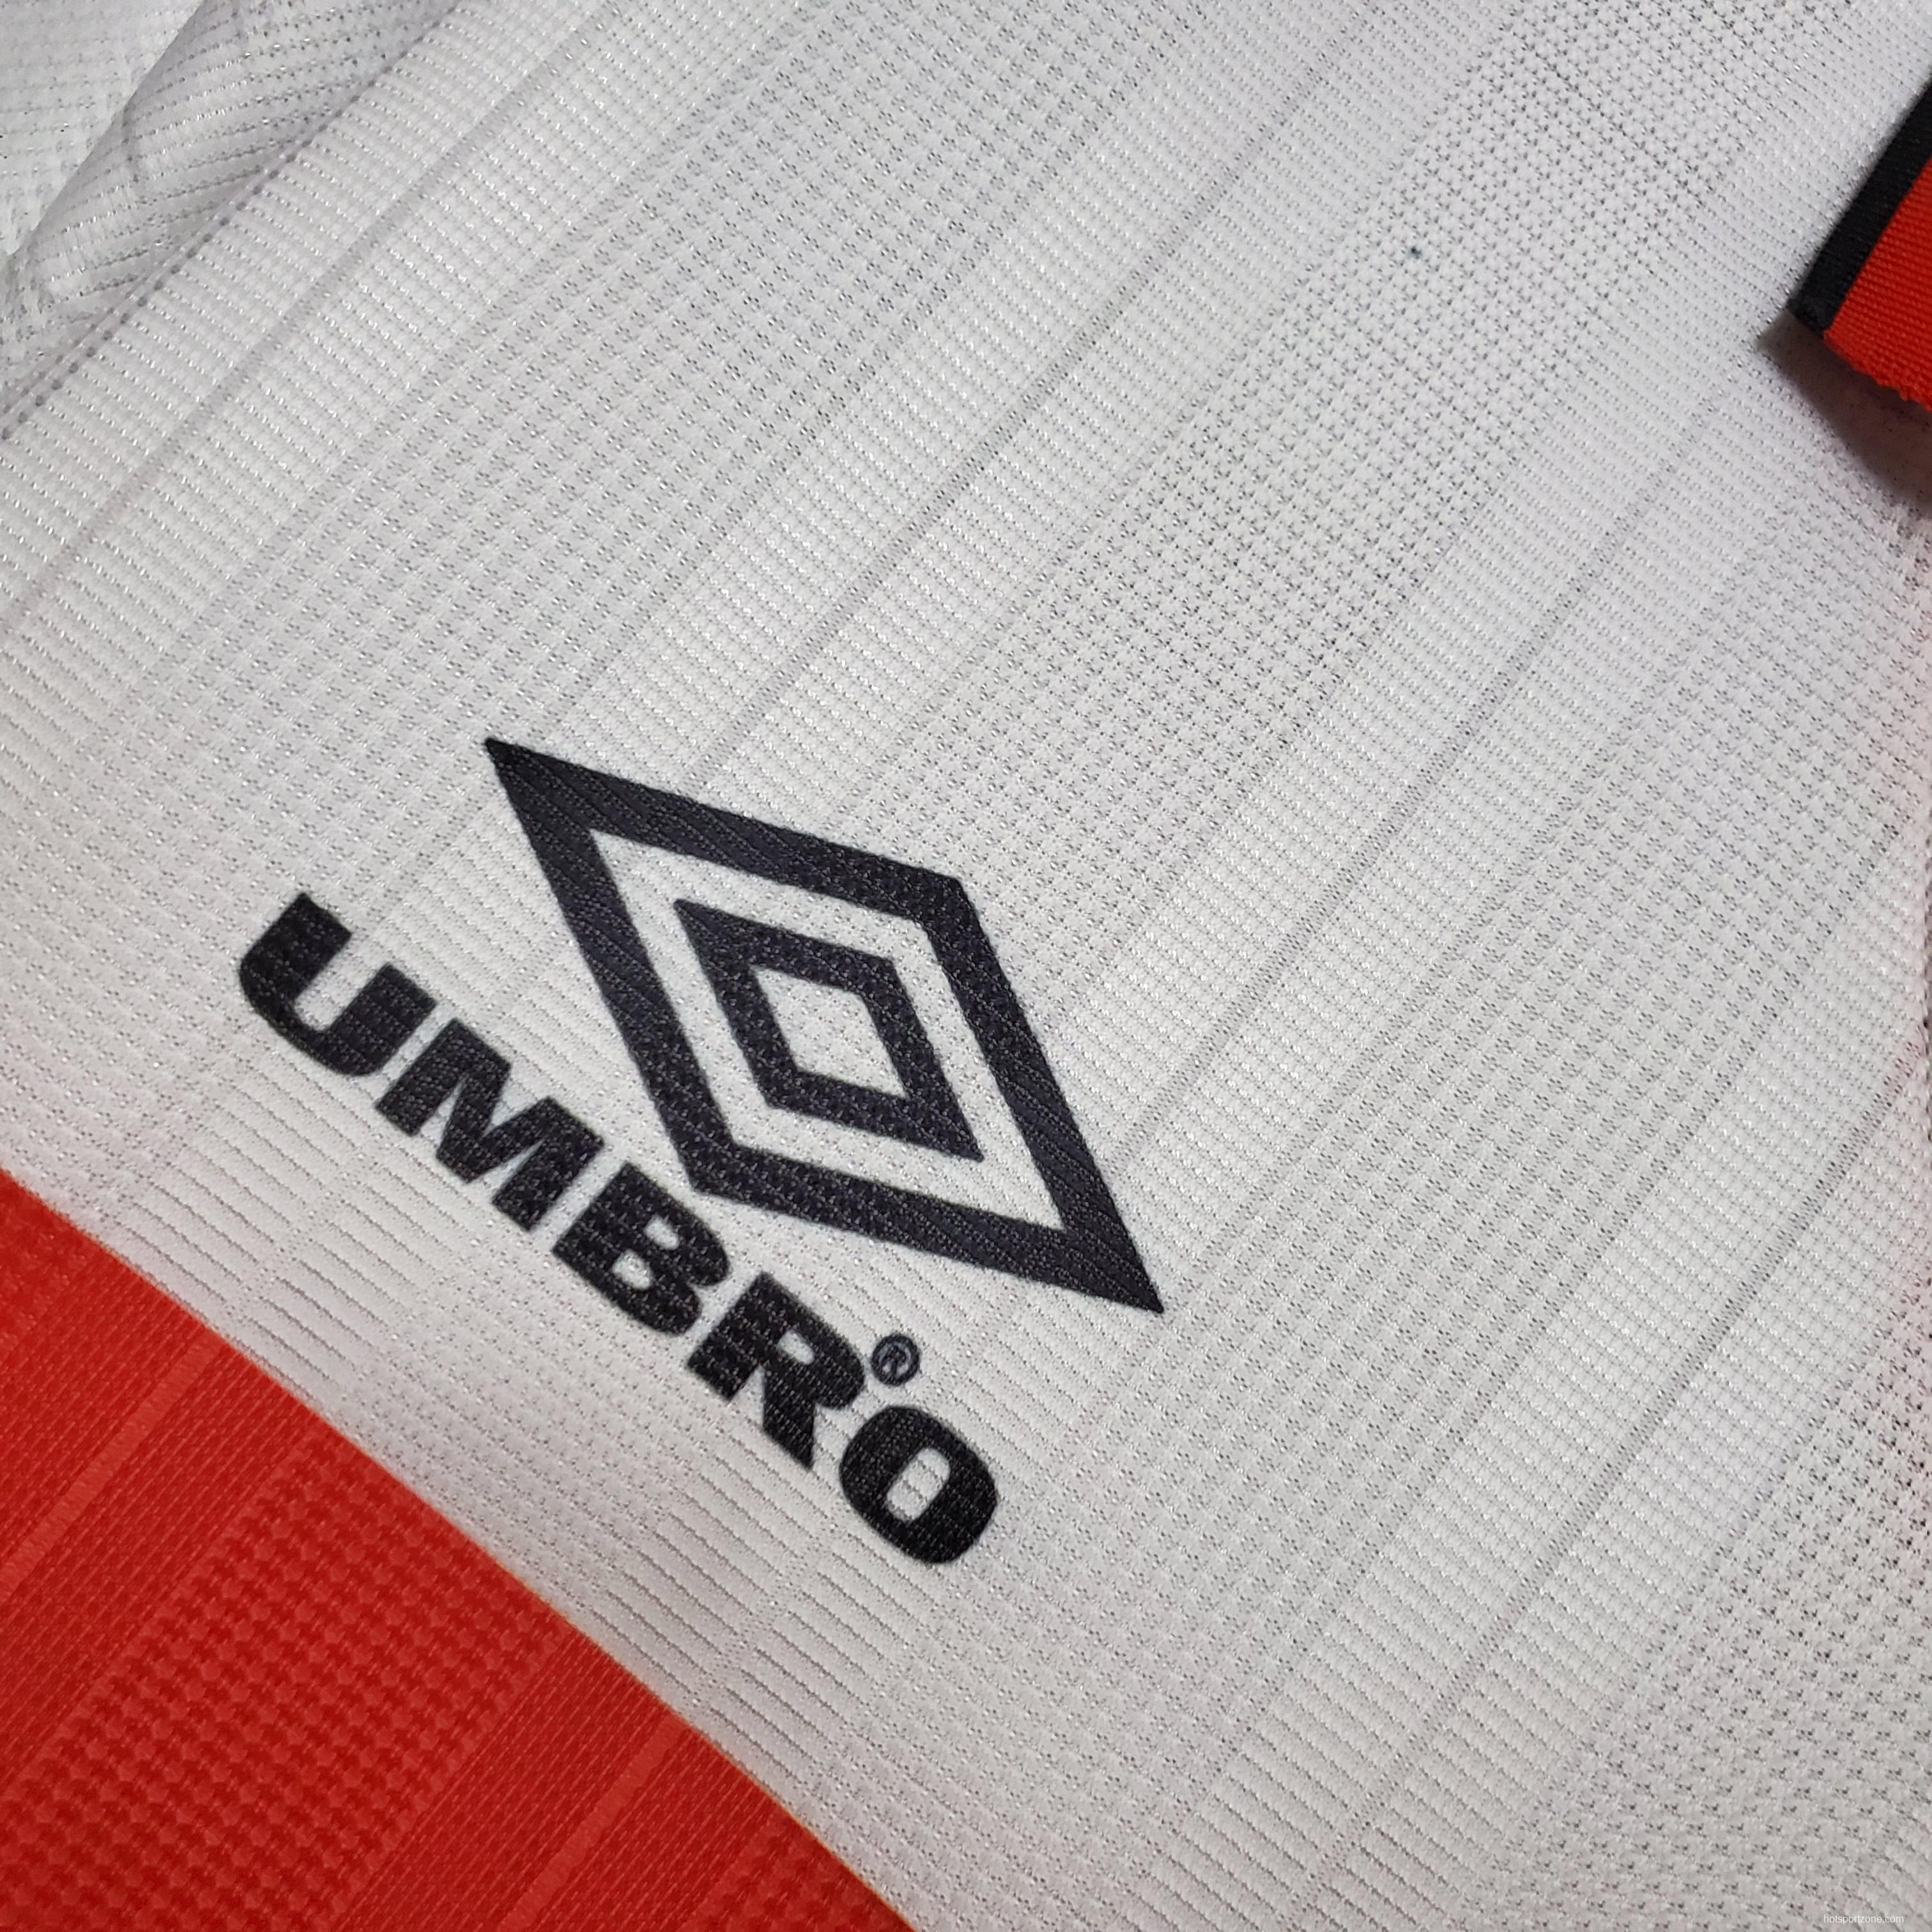 Retro Flamengo 100th anniversary away Soccer Jersey